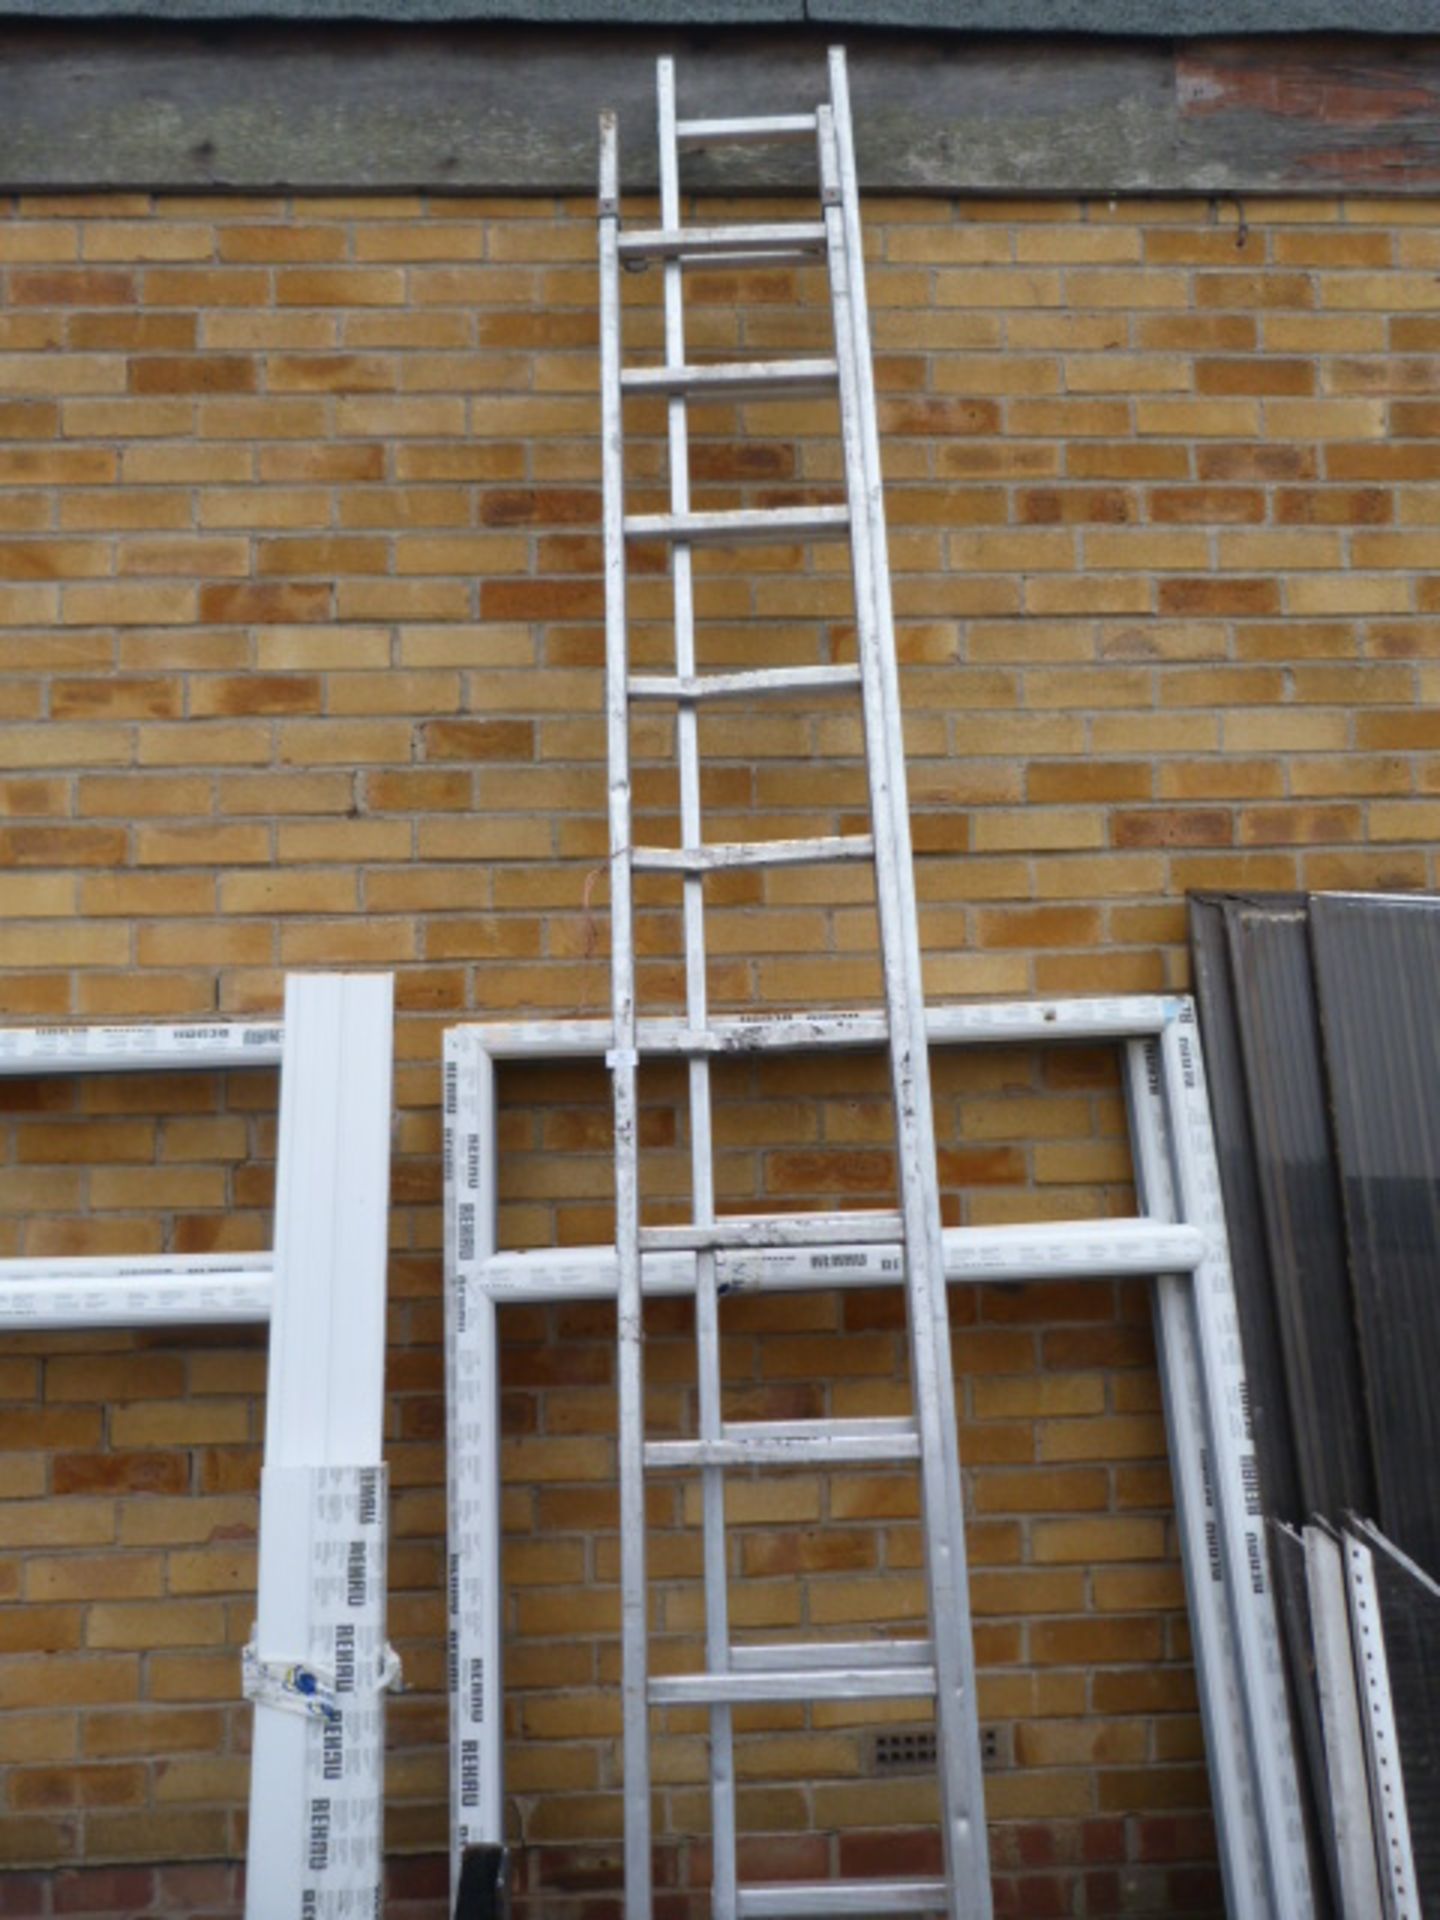 Aluminium Extending Ladder